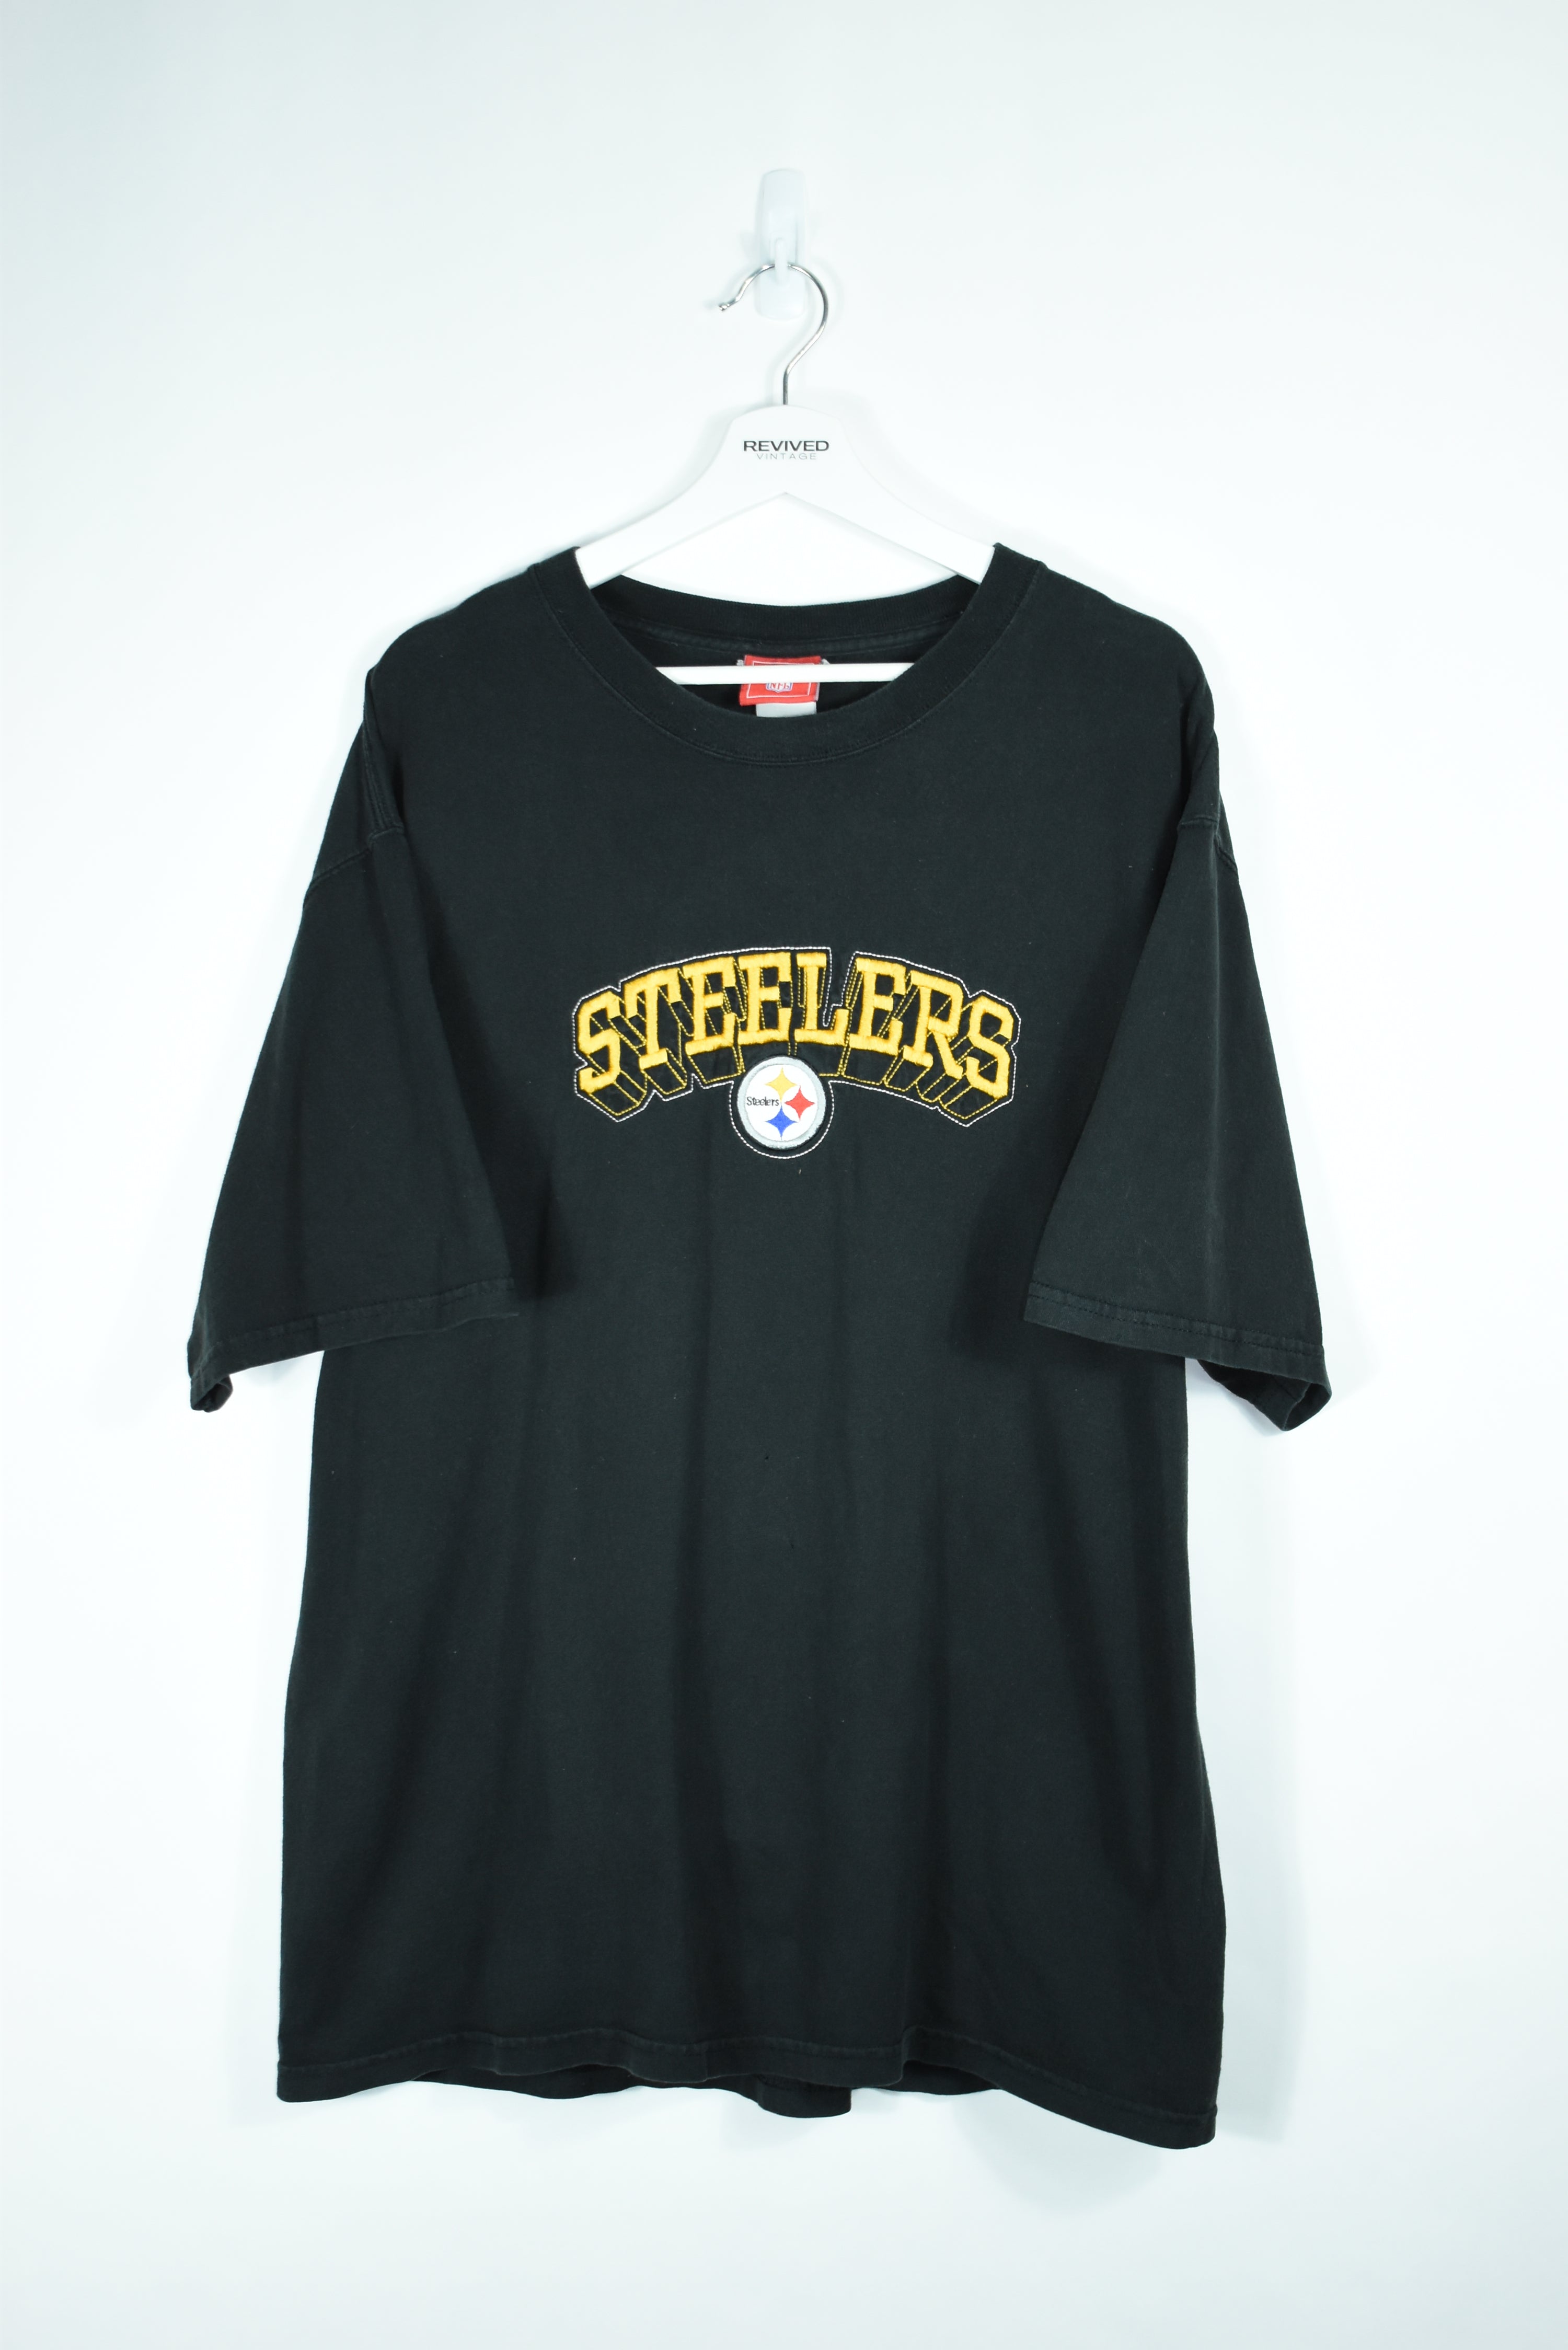 Vintage Lee Sport Steelers Embroidery T Shirt Xlarge